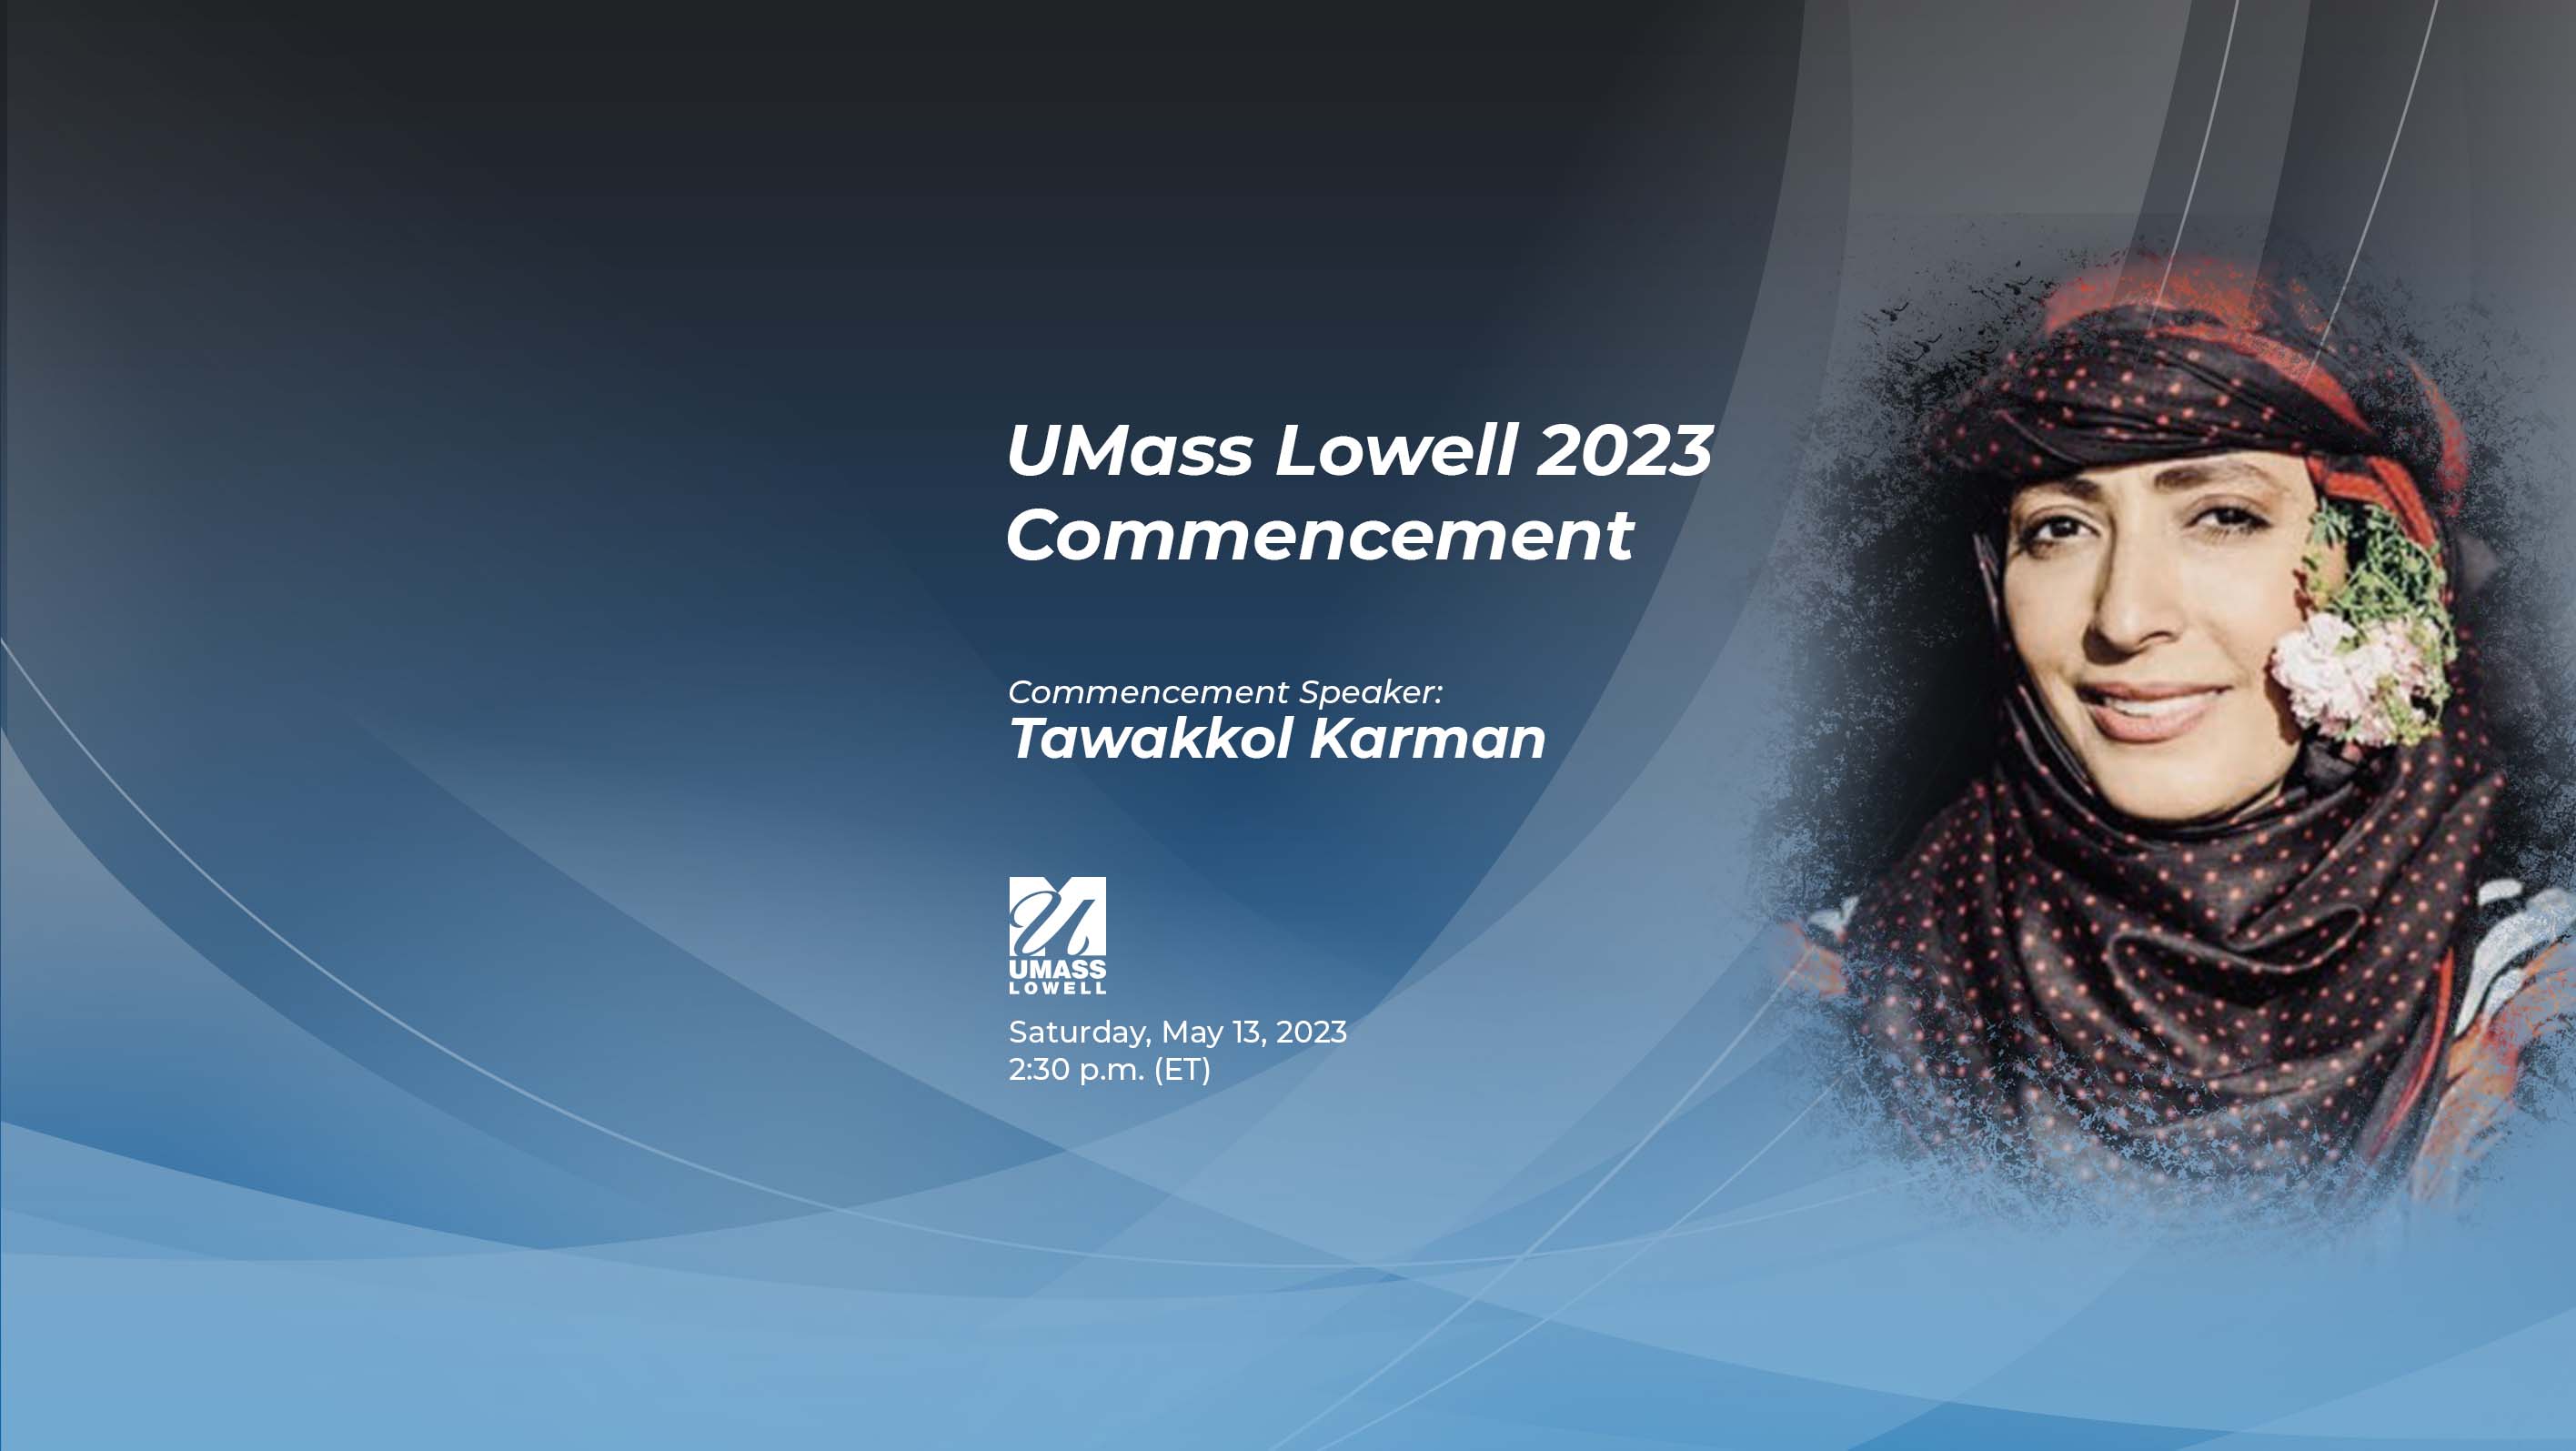 UMass Lowell awards Tawakkol Karman a Master's Degree in global security